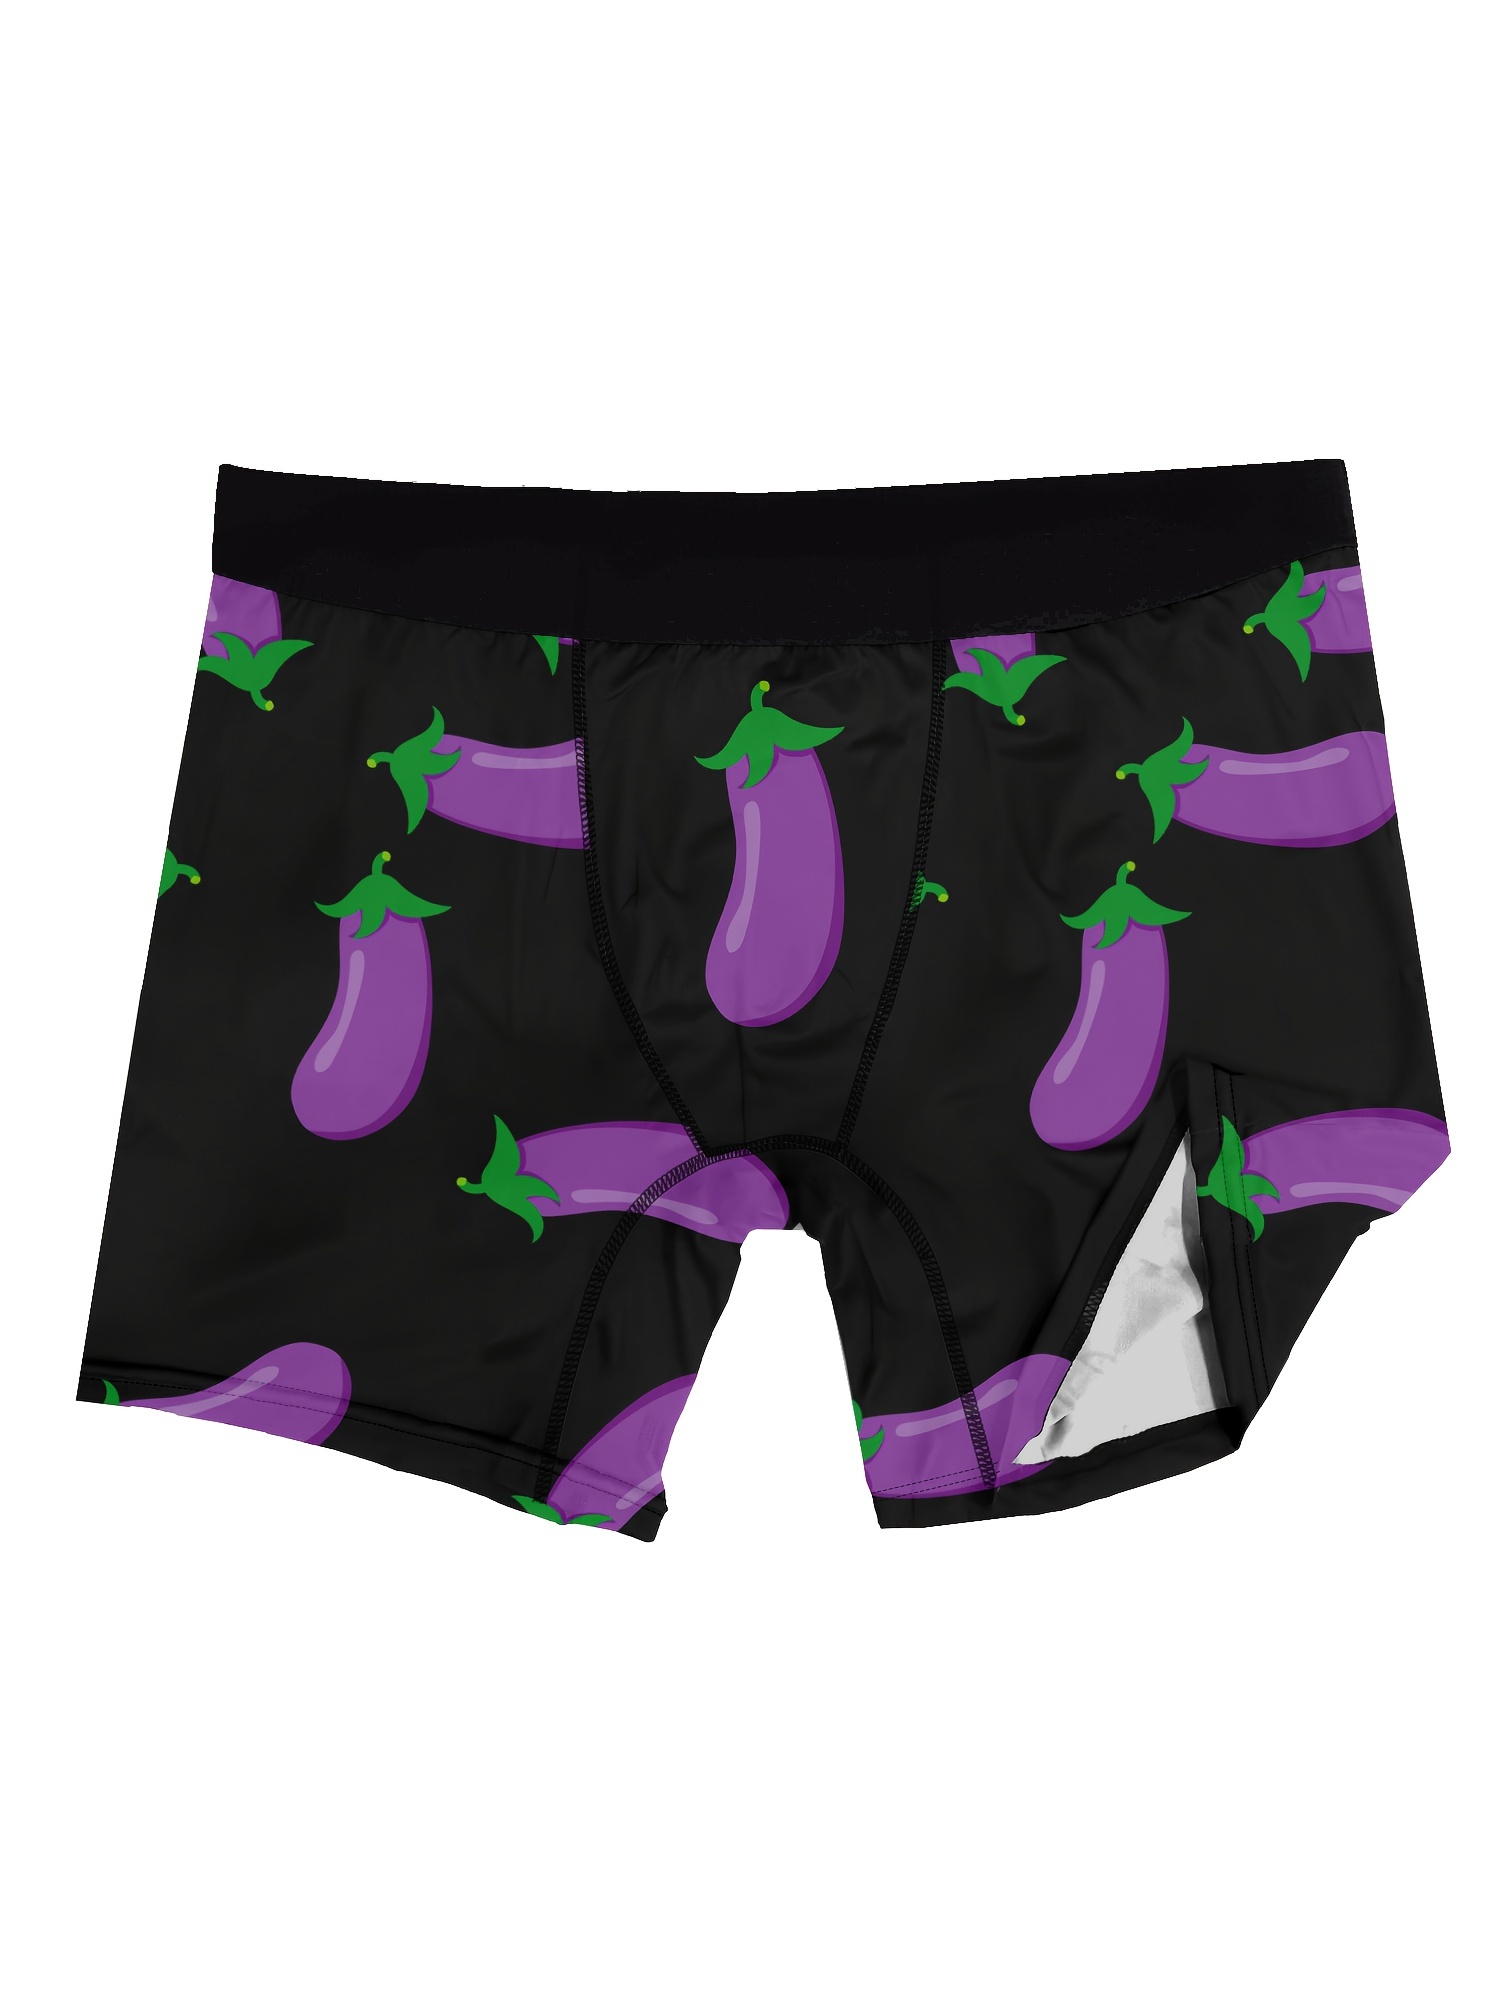 mens underwear purple eggplant print fashion novelty boxer briefs shorts breathable comfy high stretch boxer trunks details 1